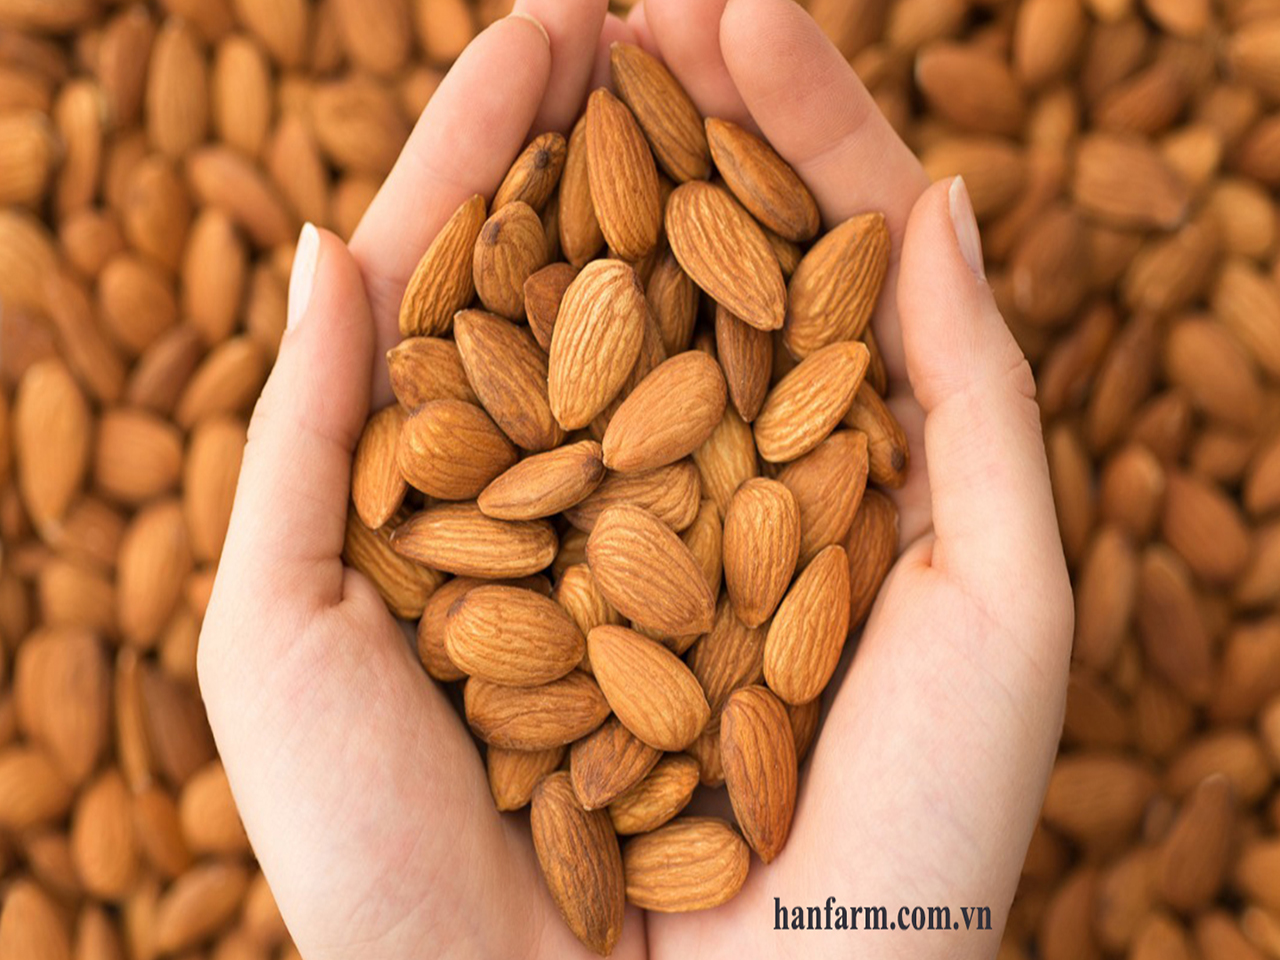 Hạnh nhân sống Mỹ không biến đổi gen nonpareil size 27/30 _ Raw almonds non GMO size 27/30